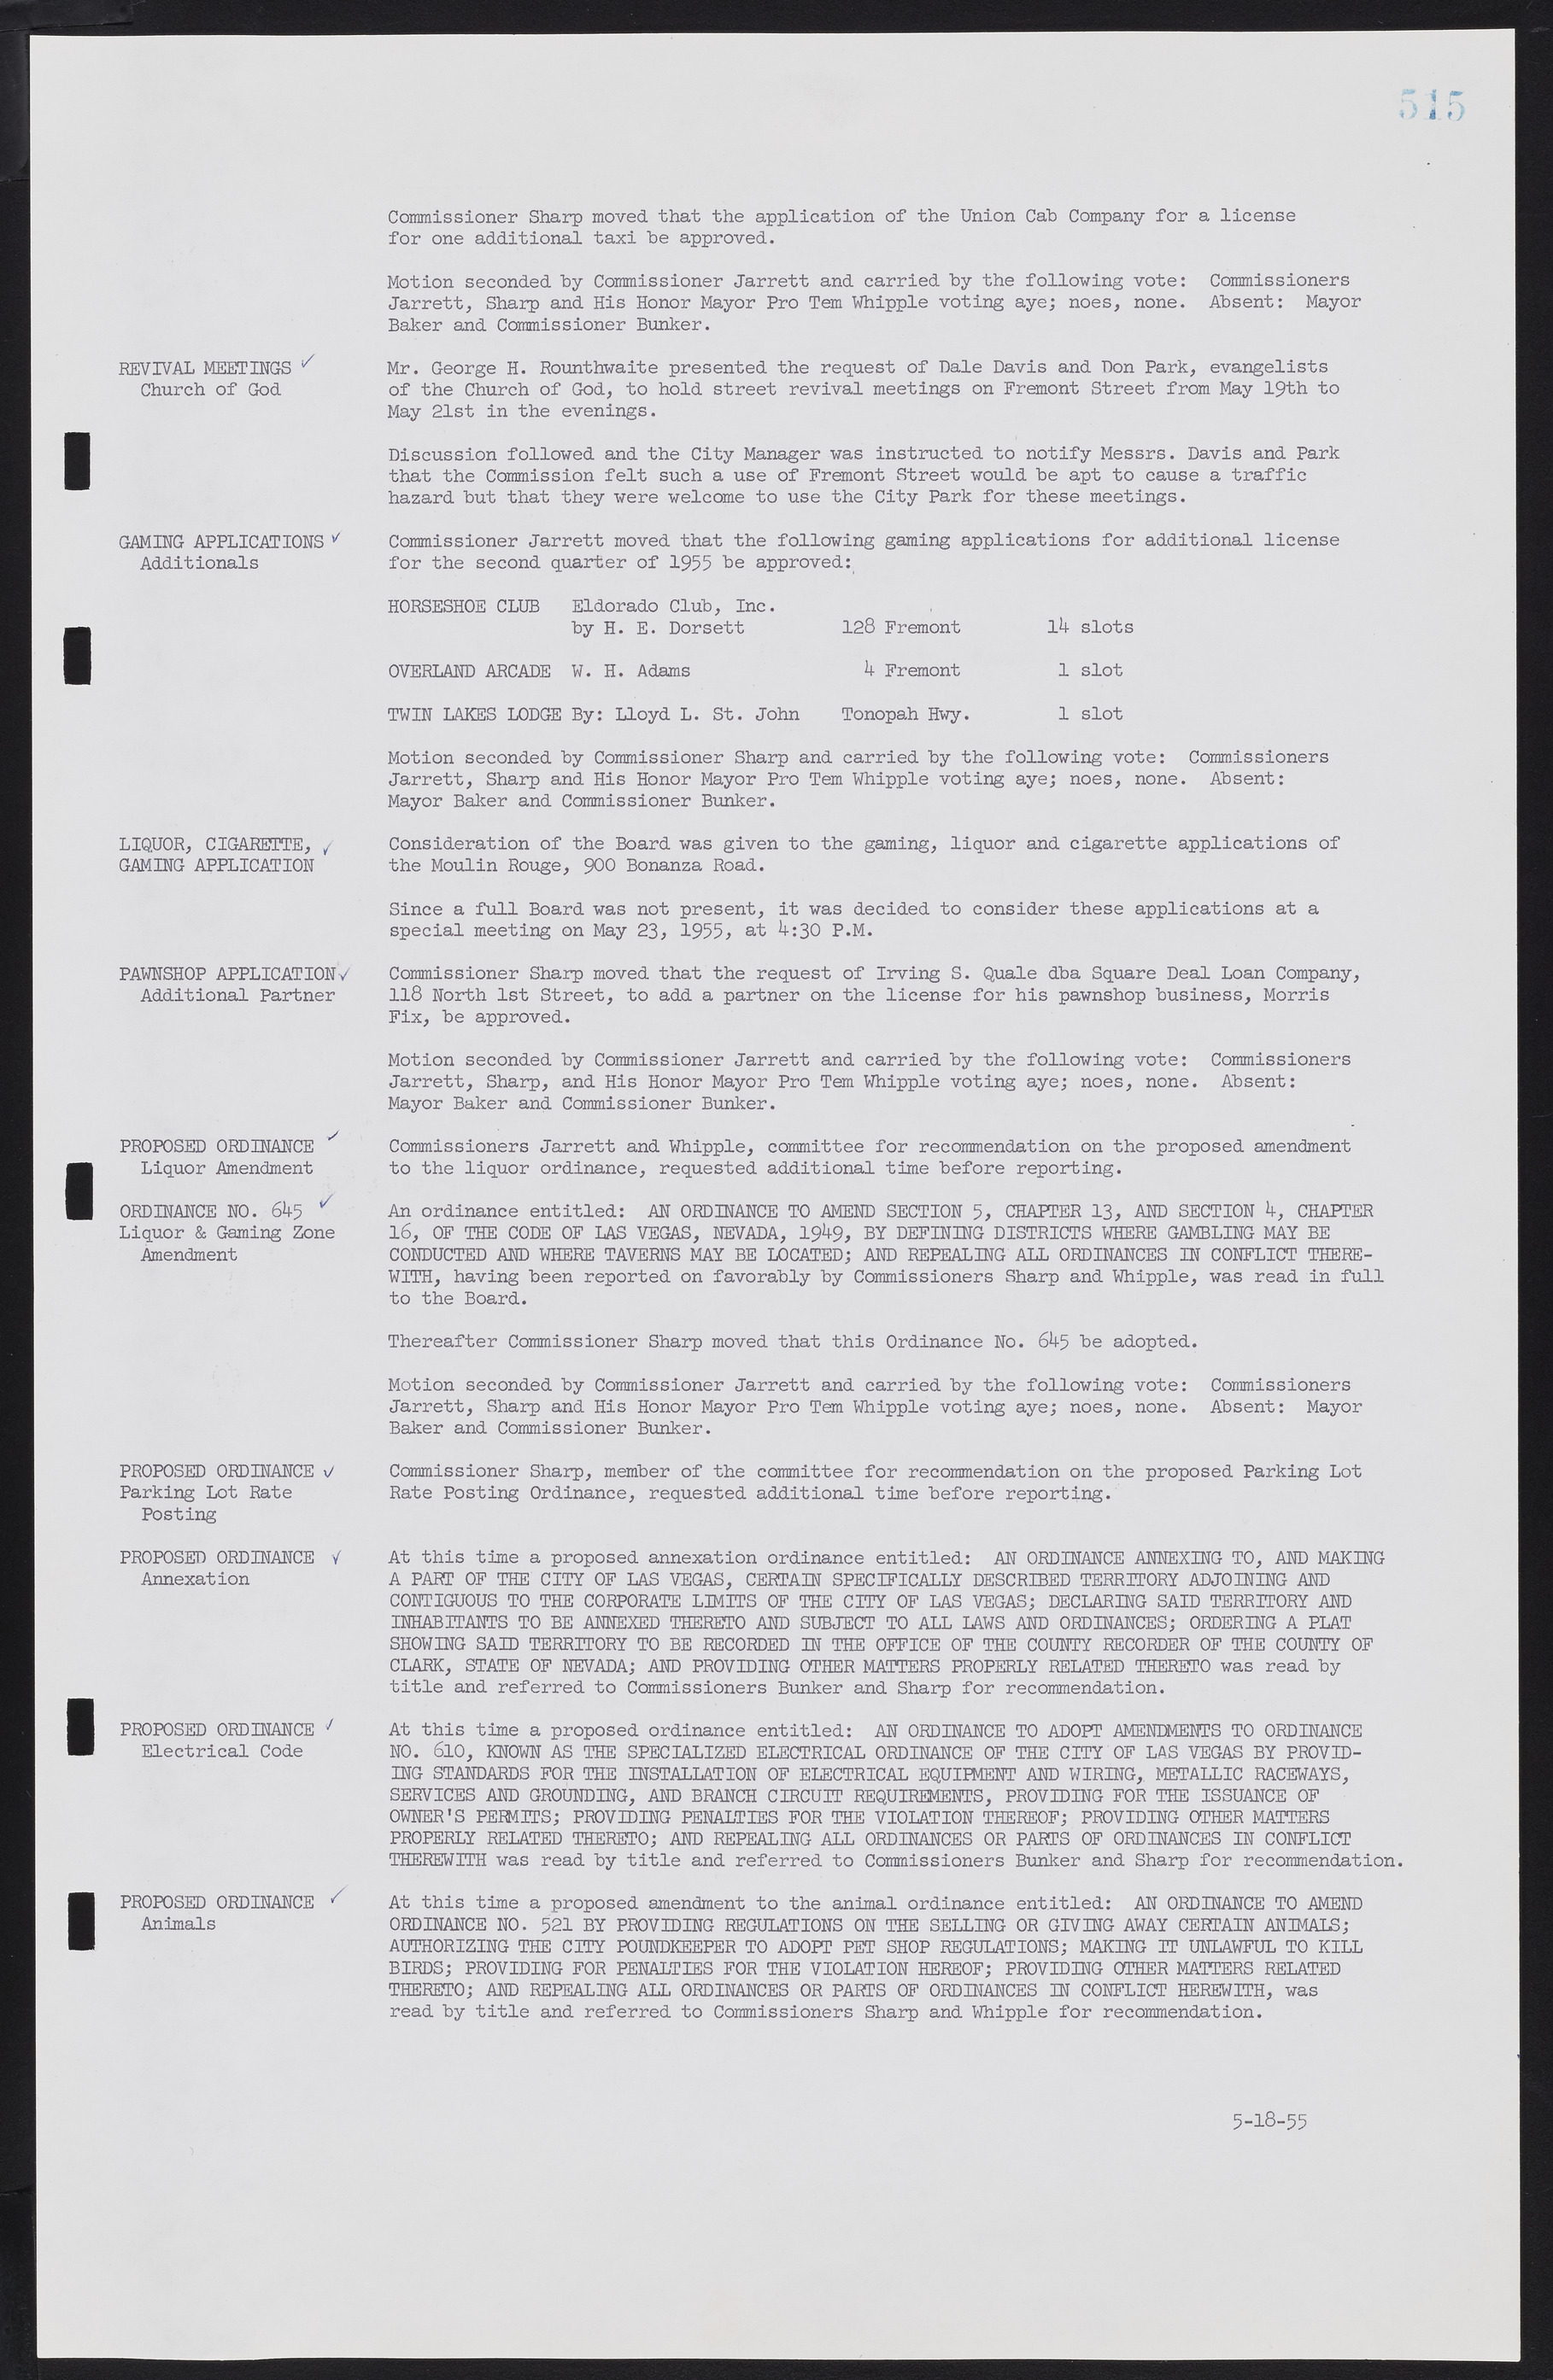 Las Vegas City Commission Minutes, February 17, 1954 to September 21, 1955, lvc000009-521